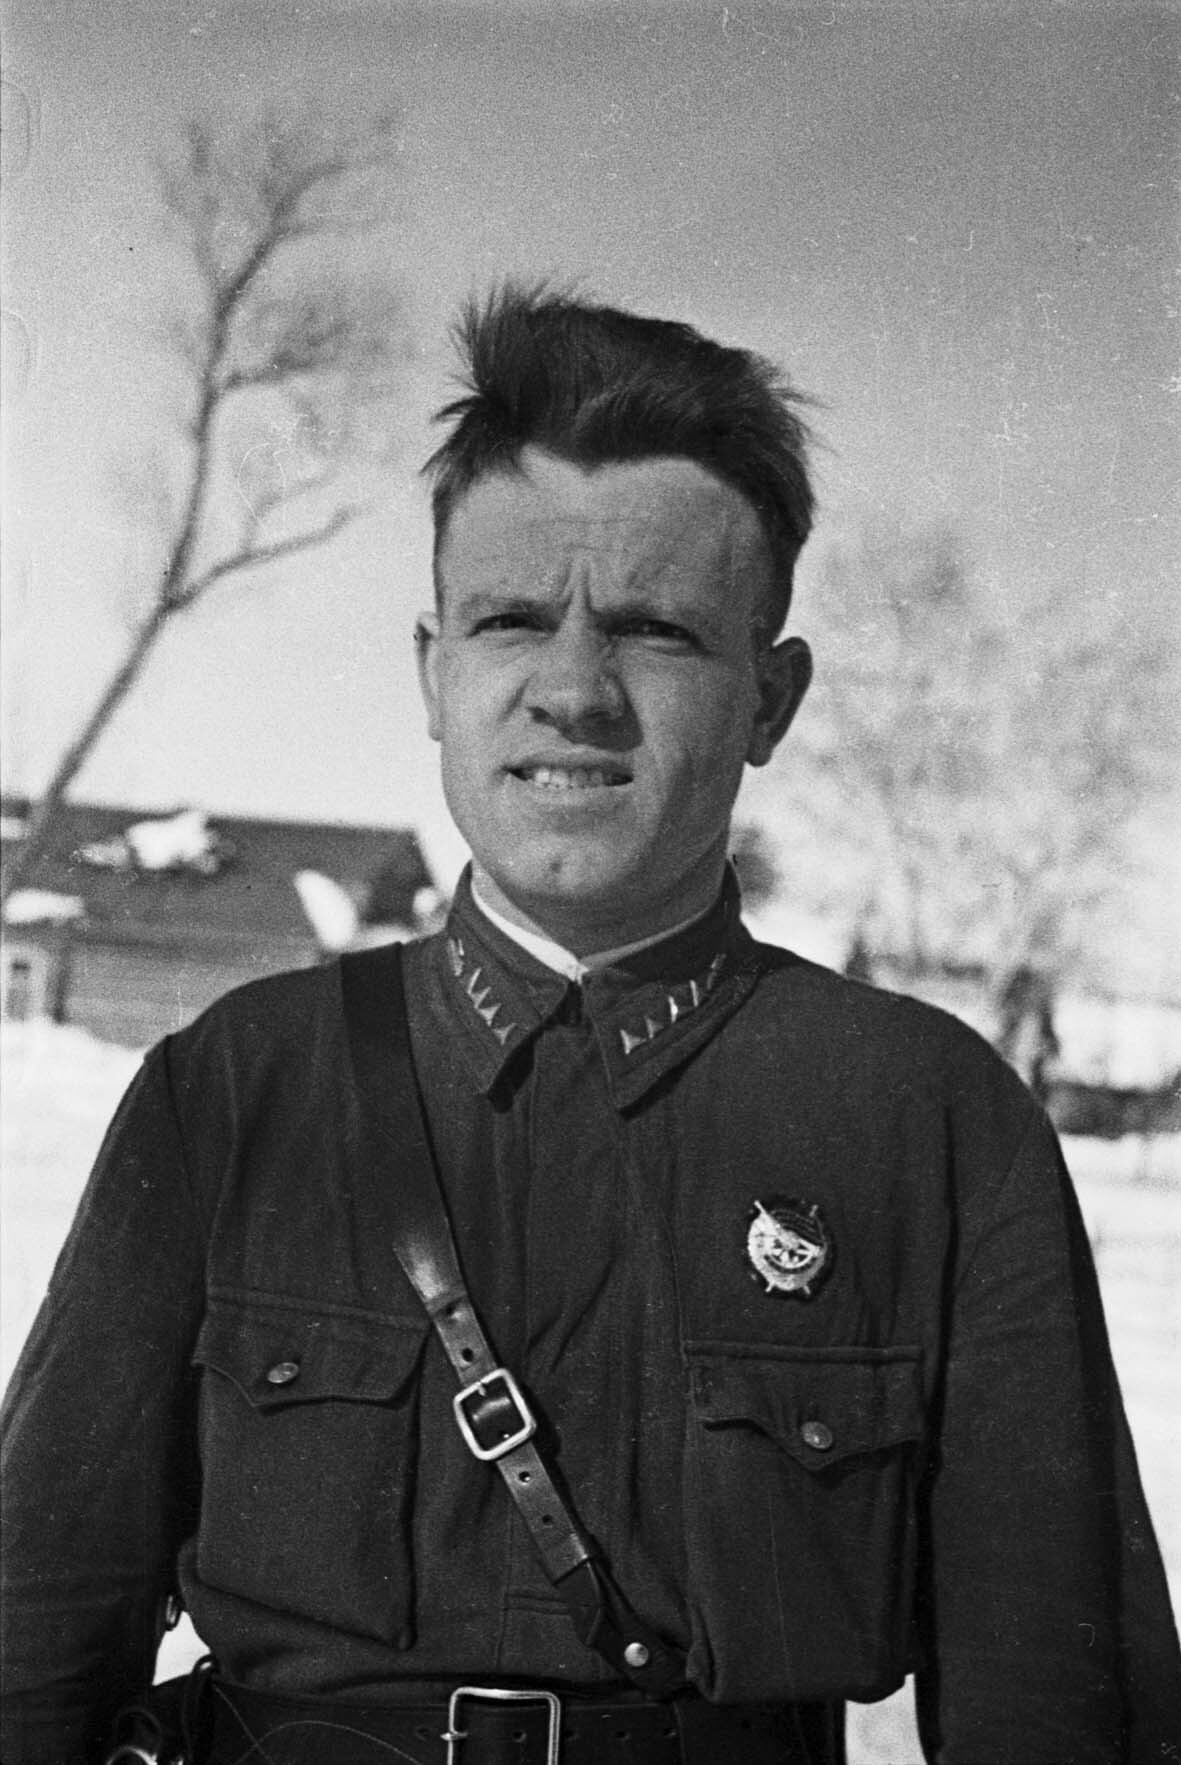 Fotografie: Panzerkommandant der 3. Panzerbrigade, Kalininer Front, 11. März 1942 (Museum Berlin-Karlshorst RR-P)